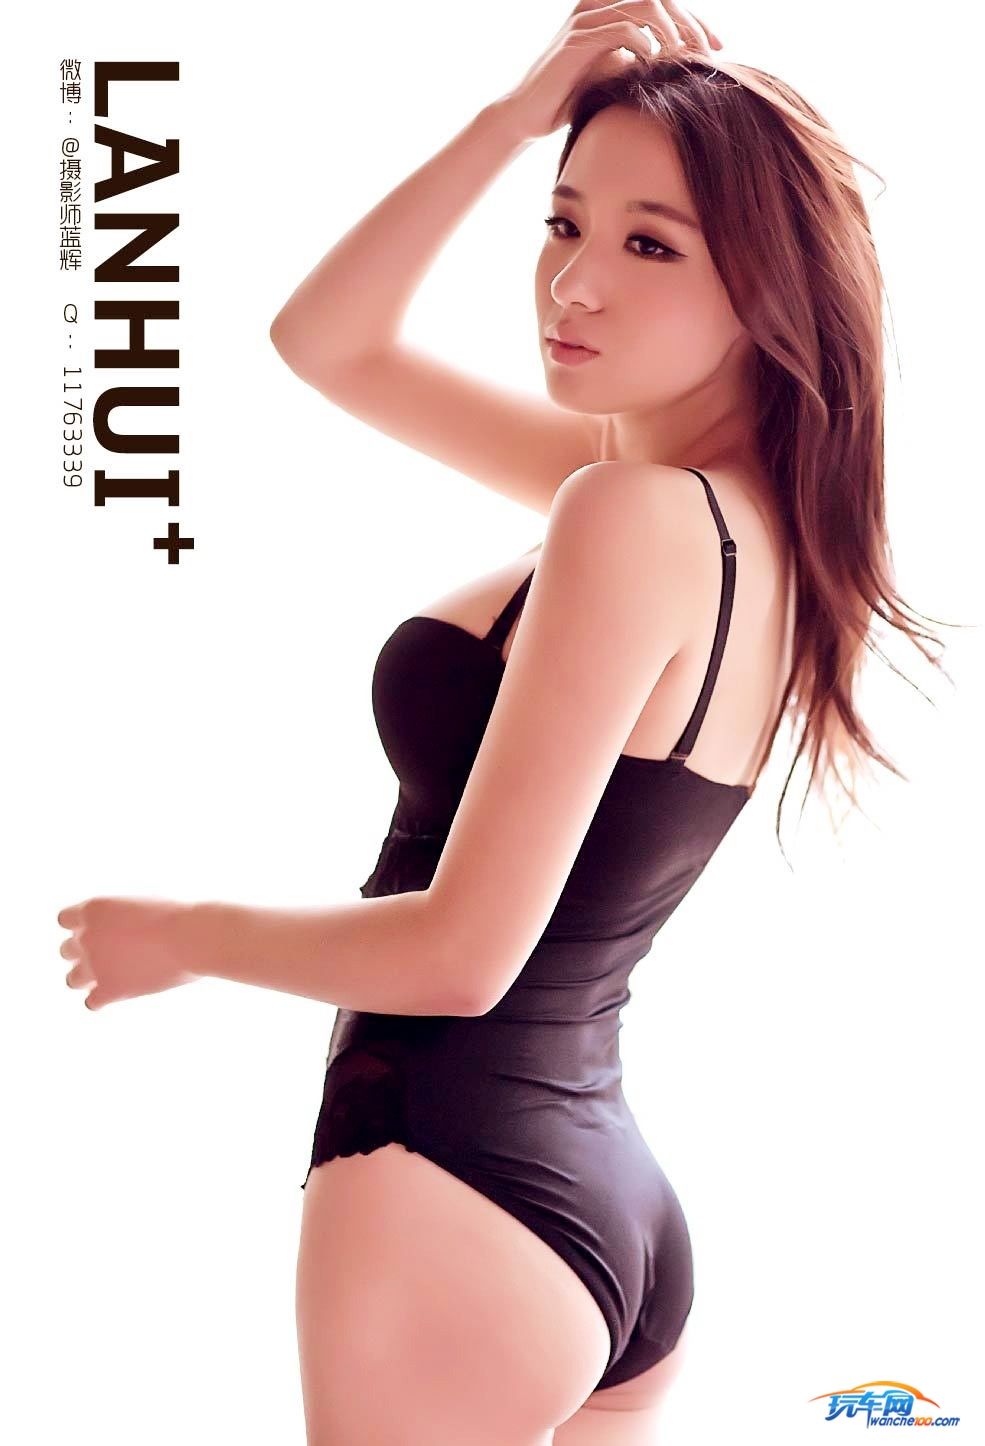 Jingyi Liu Sexy and Hottest Photos , Latest Pics